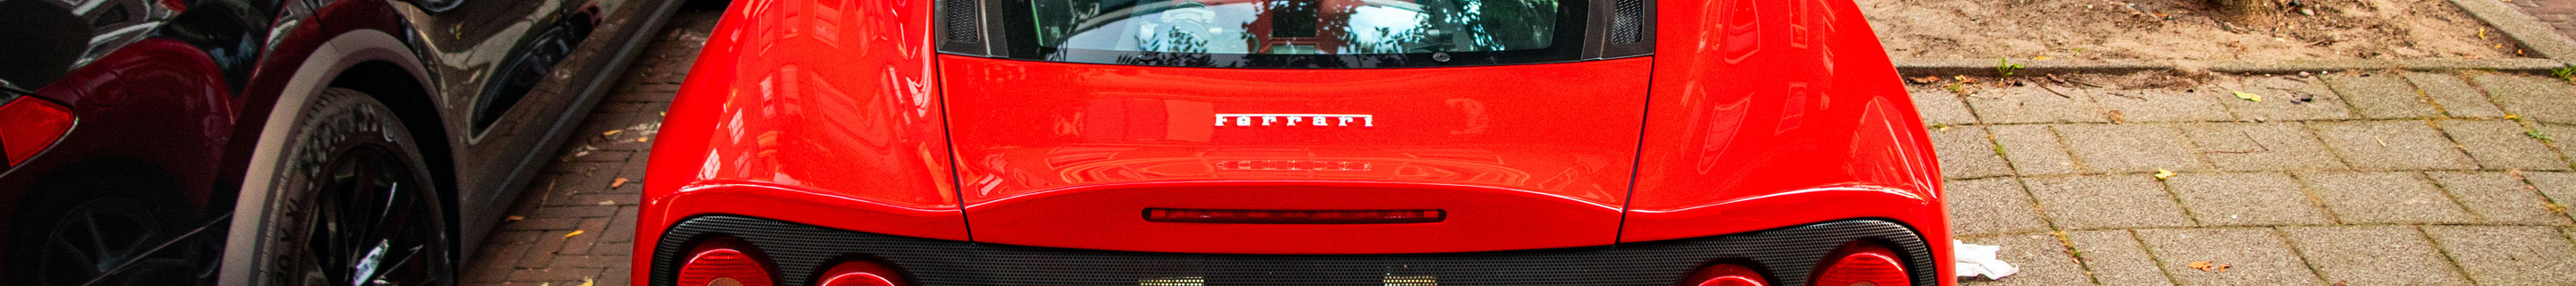 Ferrari Challenge Stradale